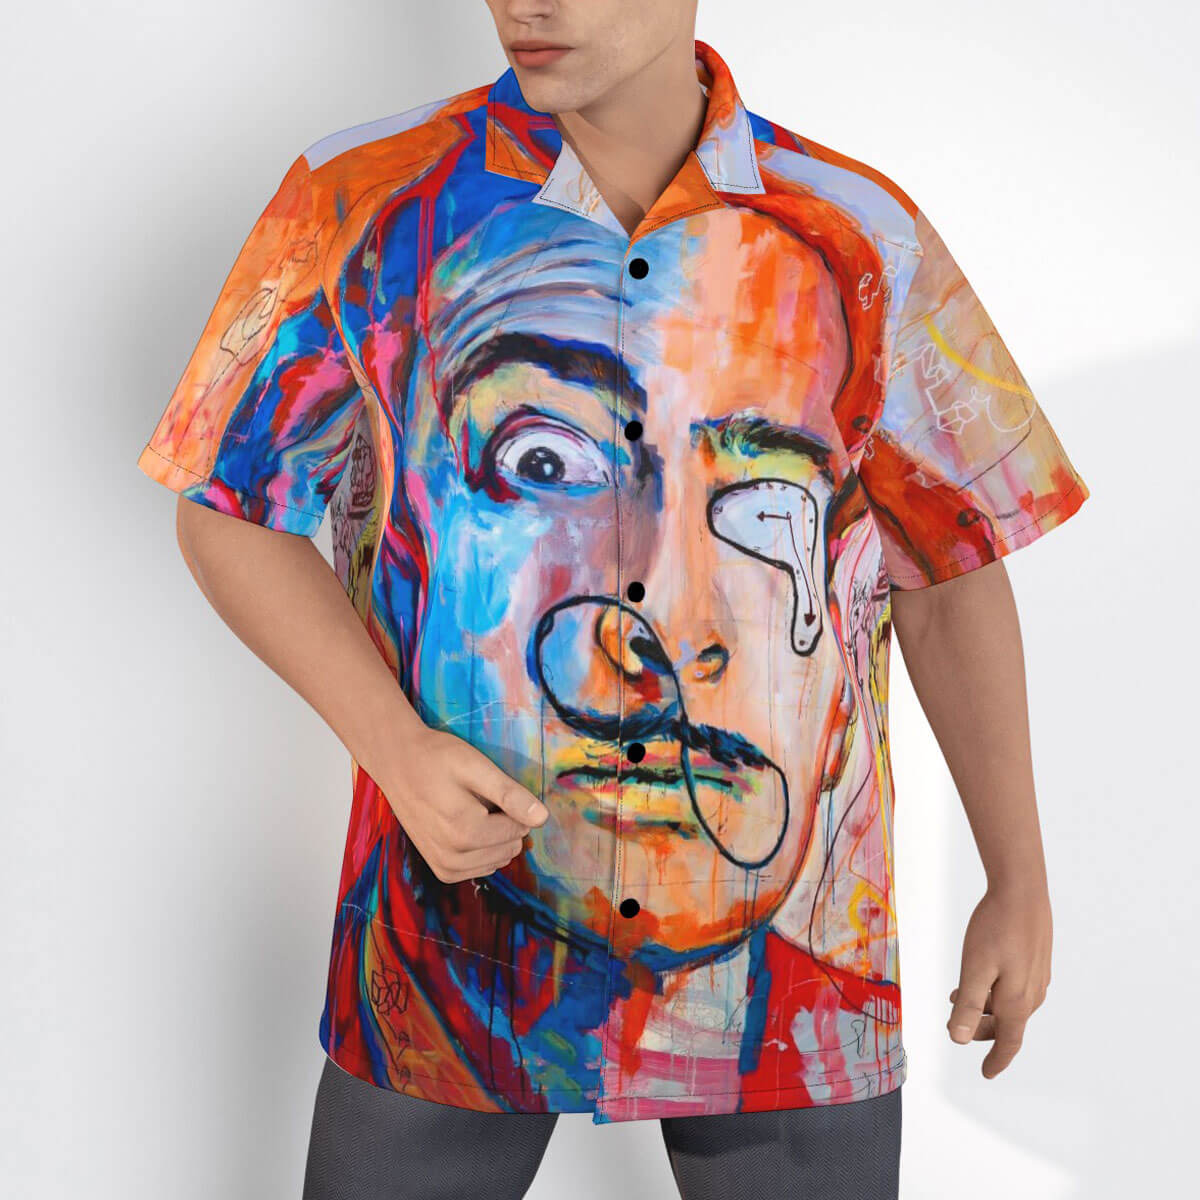 Detail of surrealist elements in Dali shirt design